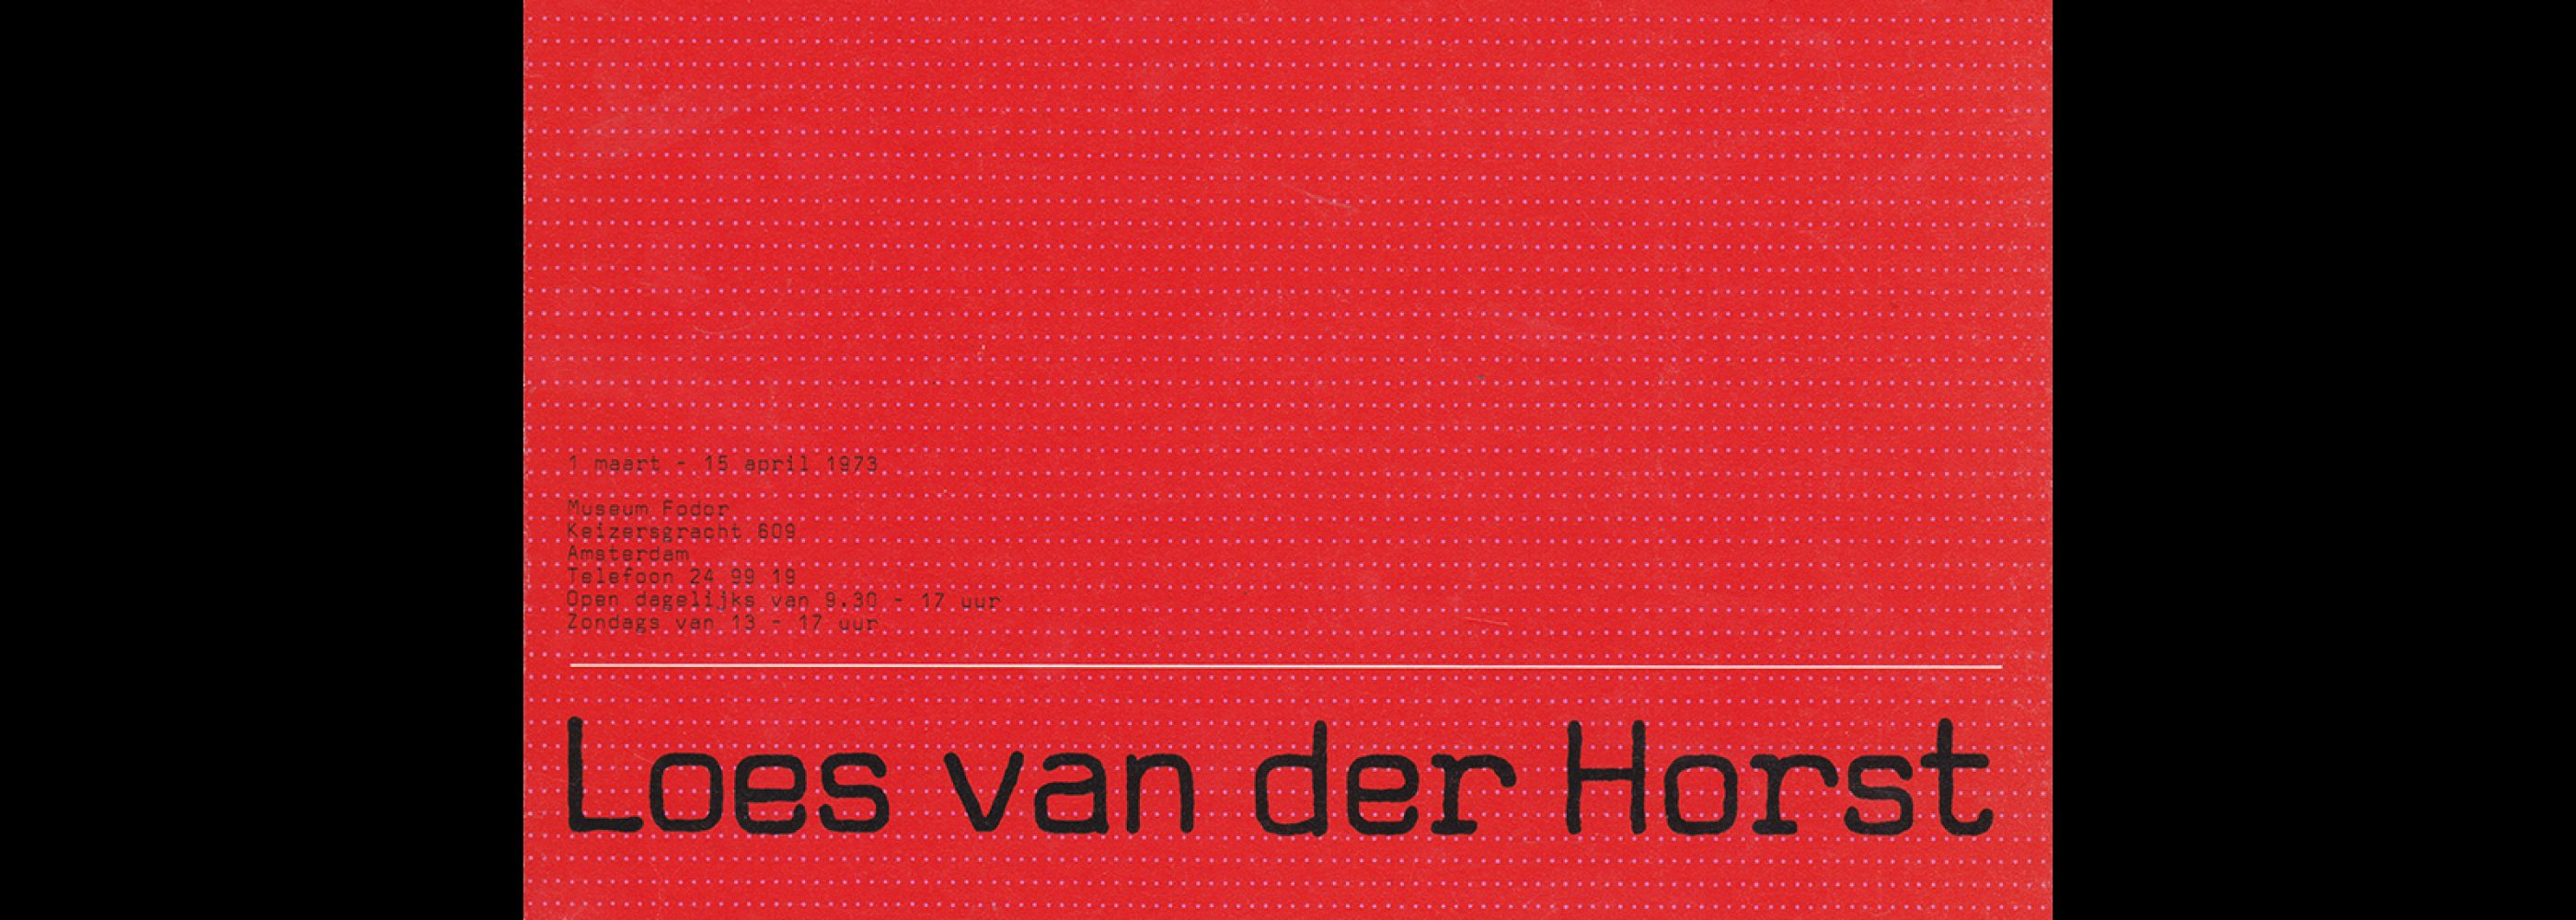 Fodor 9, 1973 - Loes van der Horst. Designed by Wim Crouwel and Anne Stienstra (Total Design)